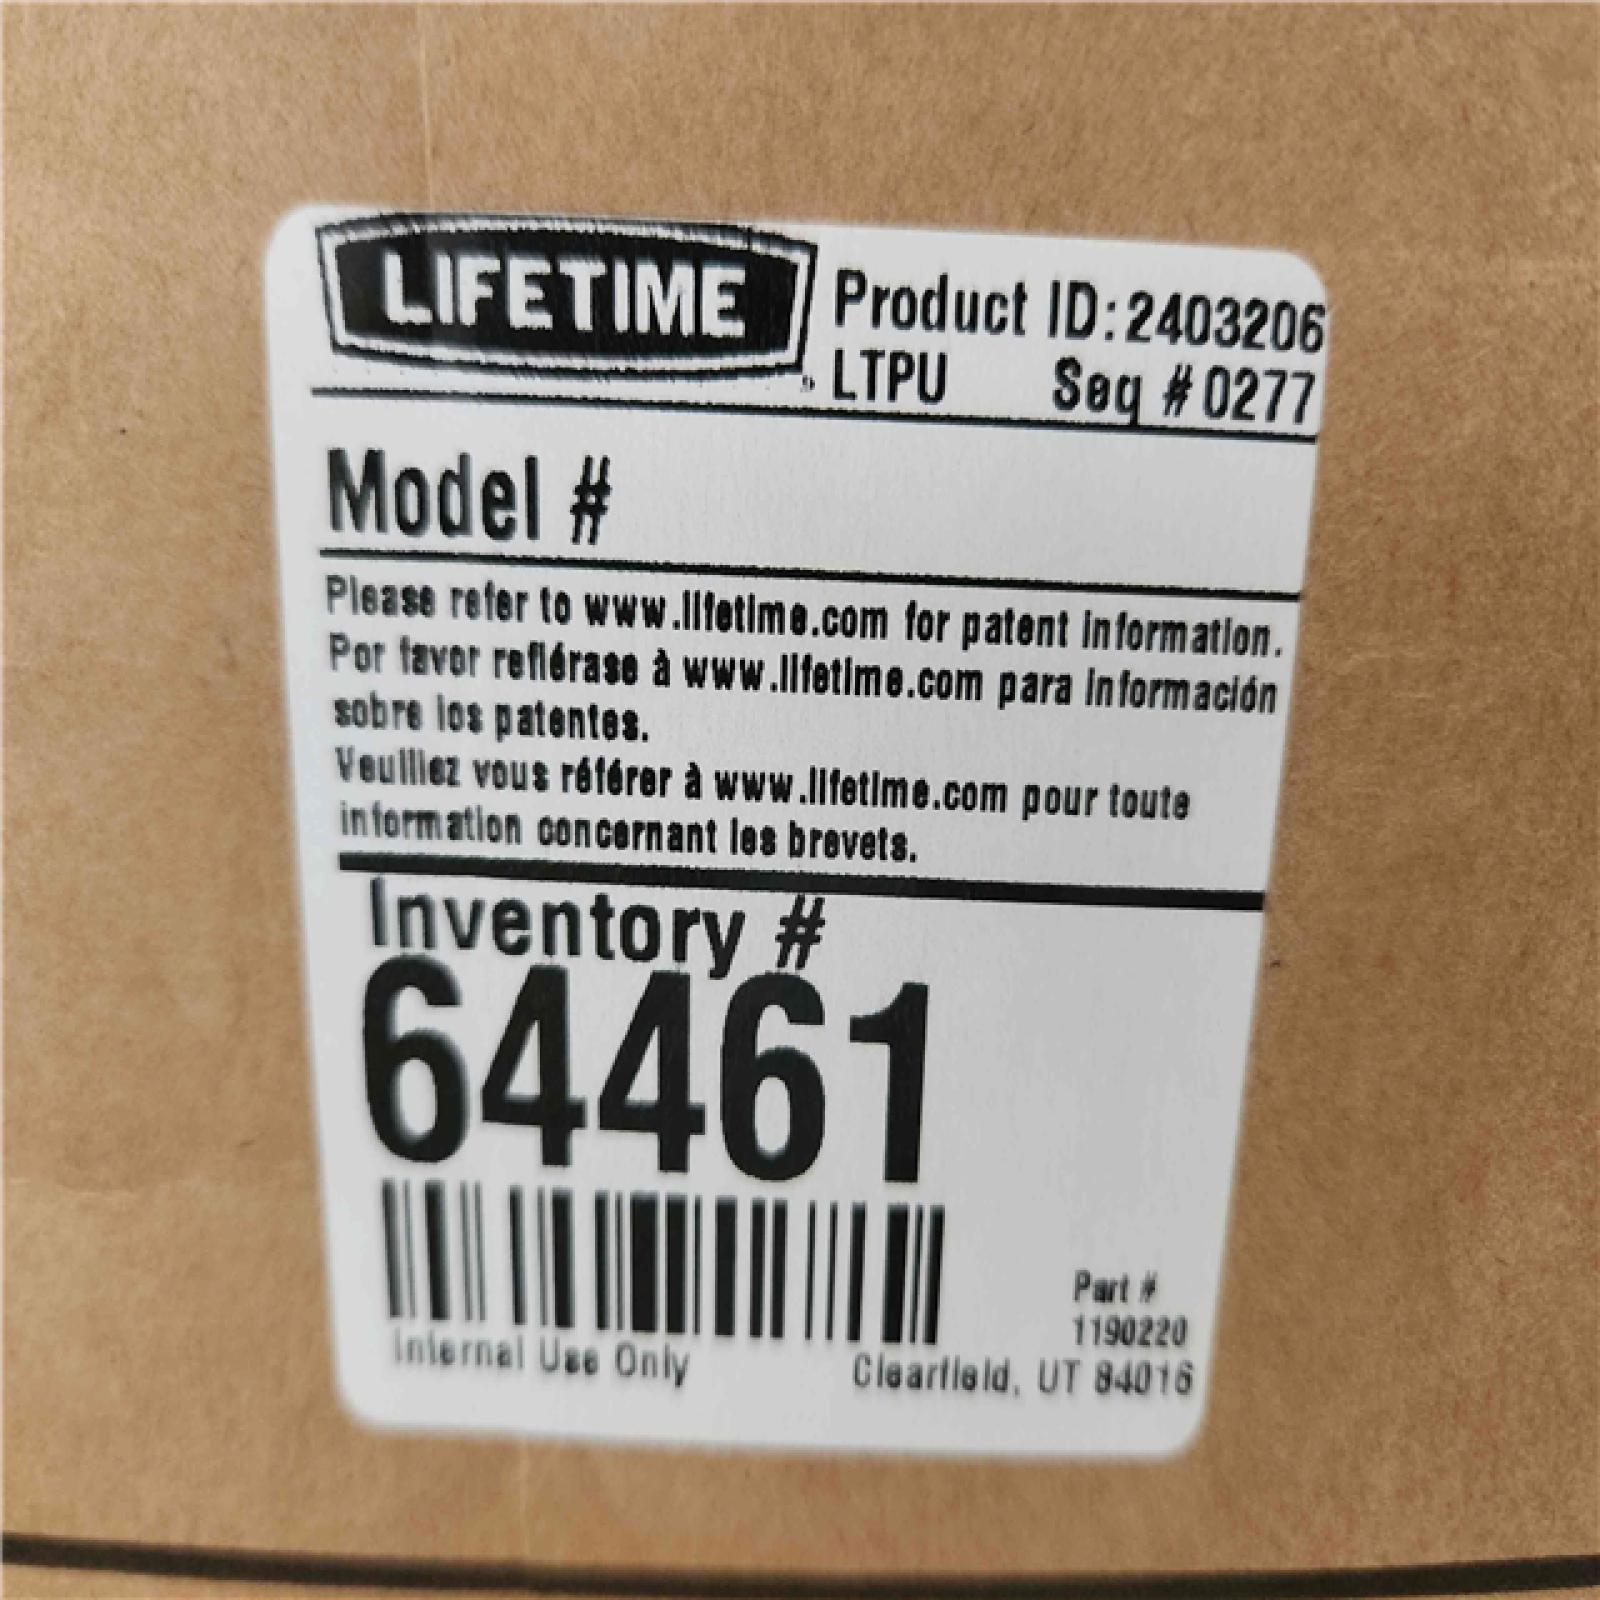 Phoenix Location NEW Lifetime 15 ft. x 8 ft. Resin Outdoor Garden Shed Model #6446